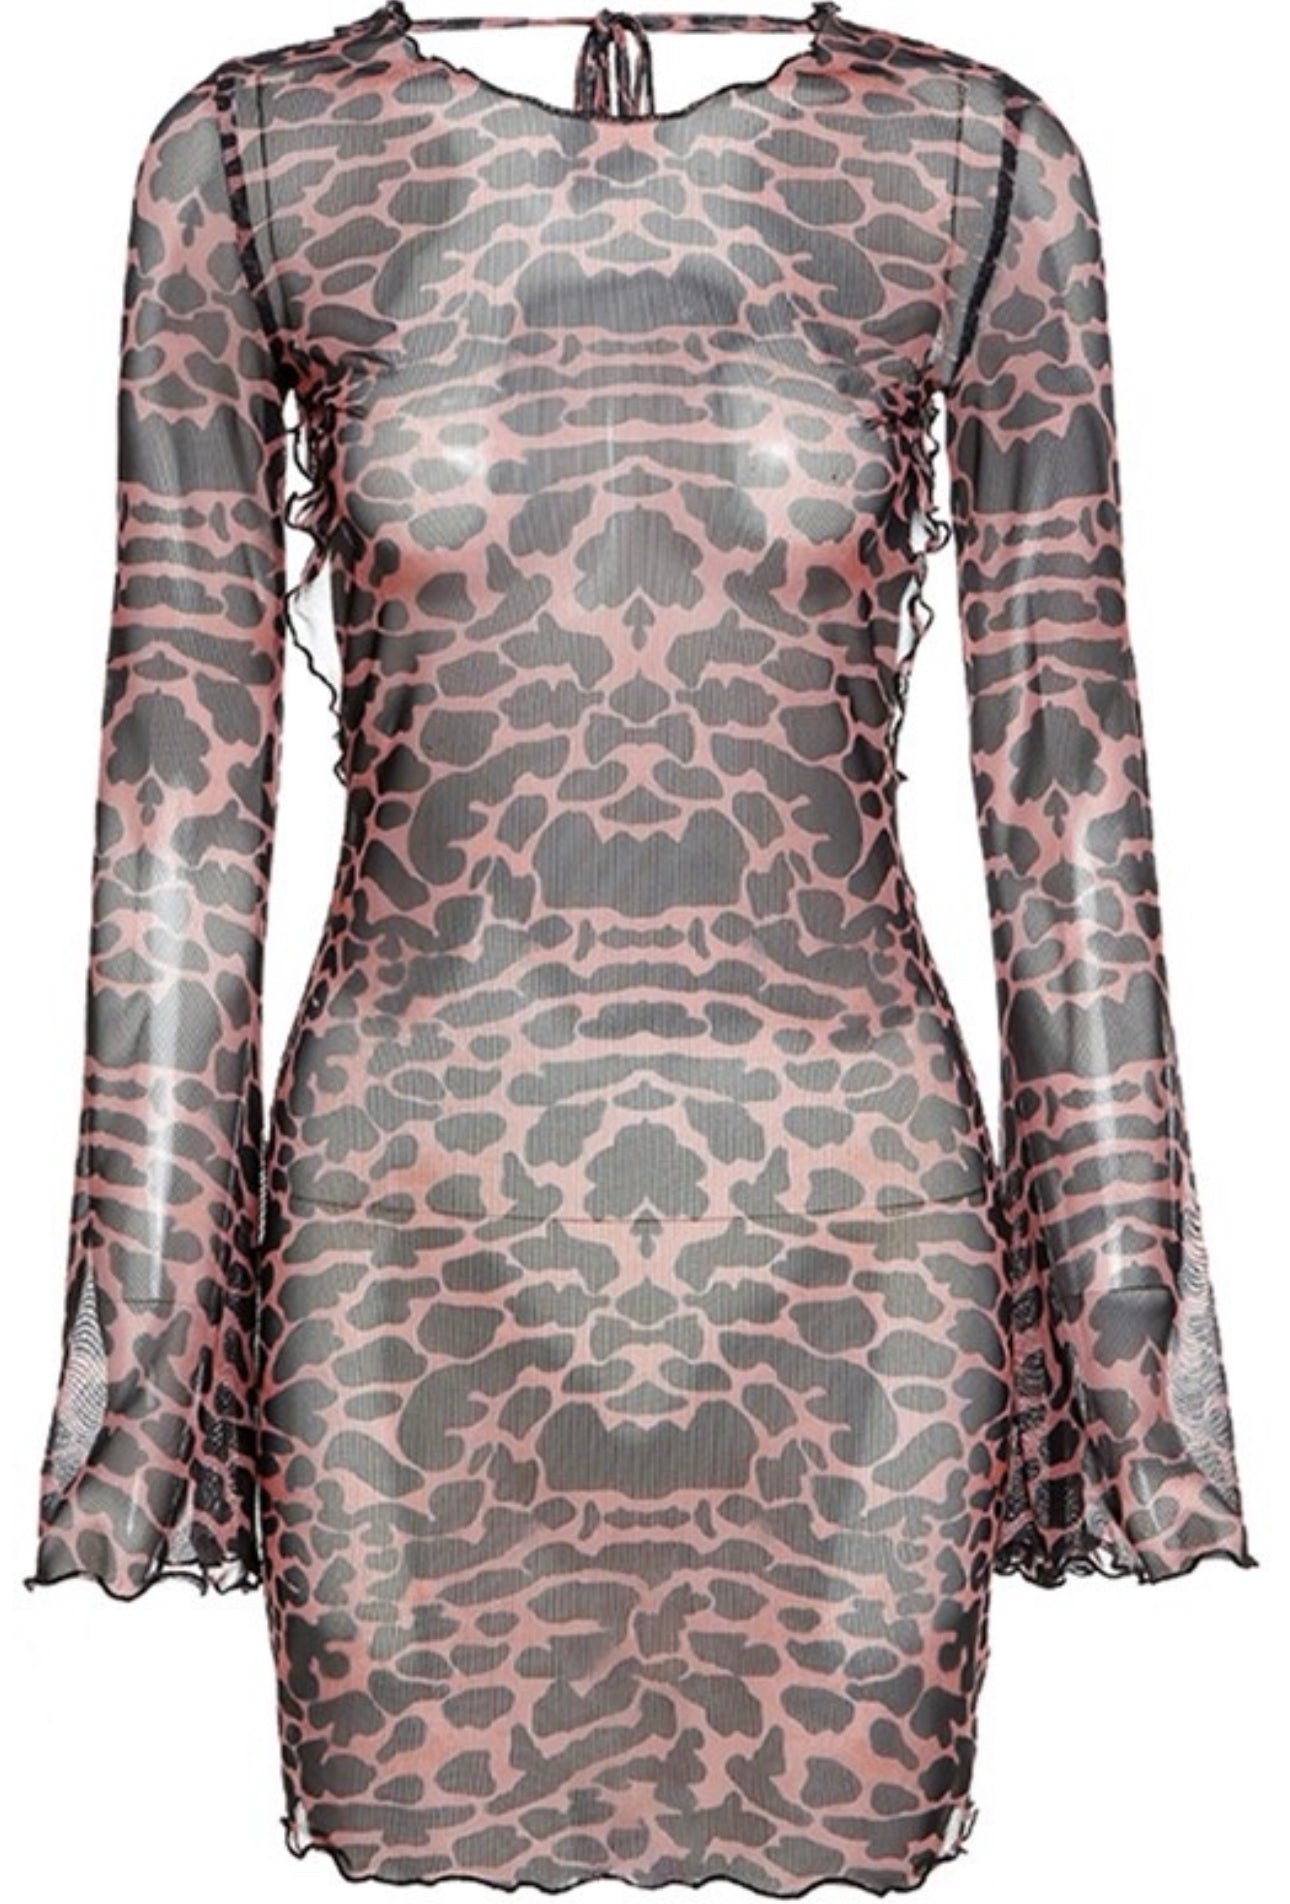 Purrfect Sheer Leopard Print Backless Dress